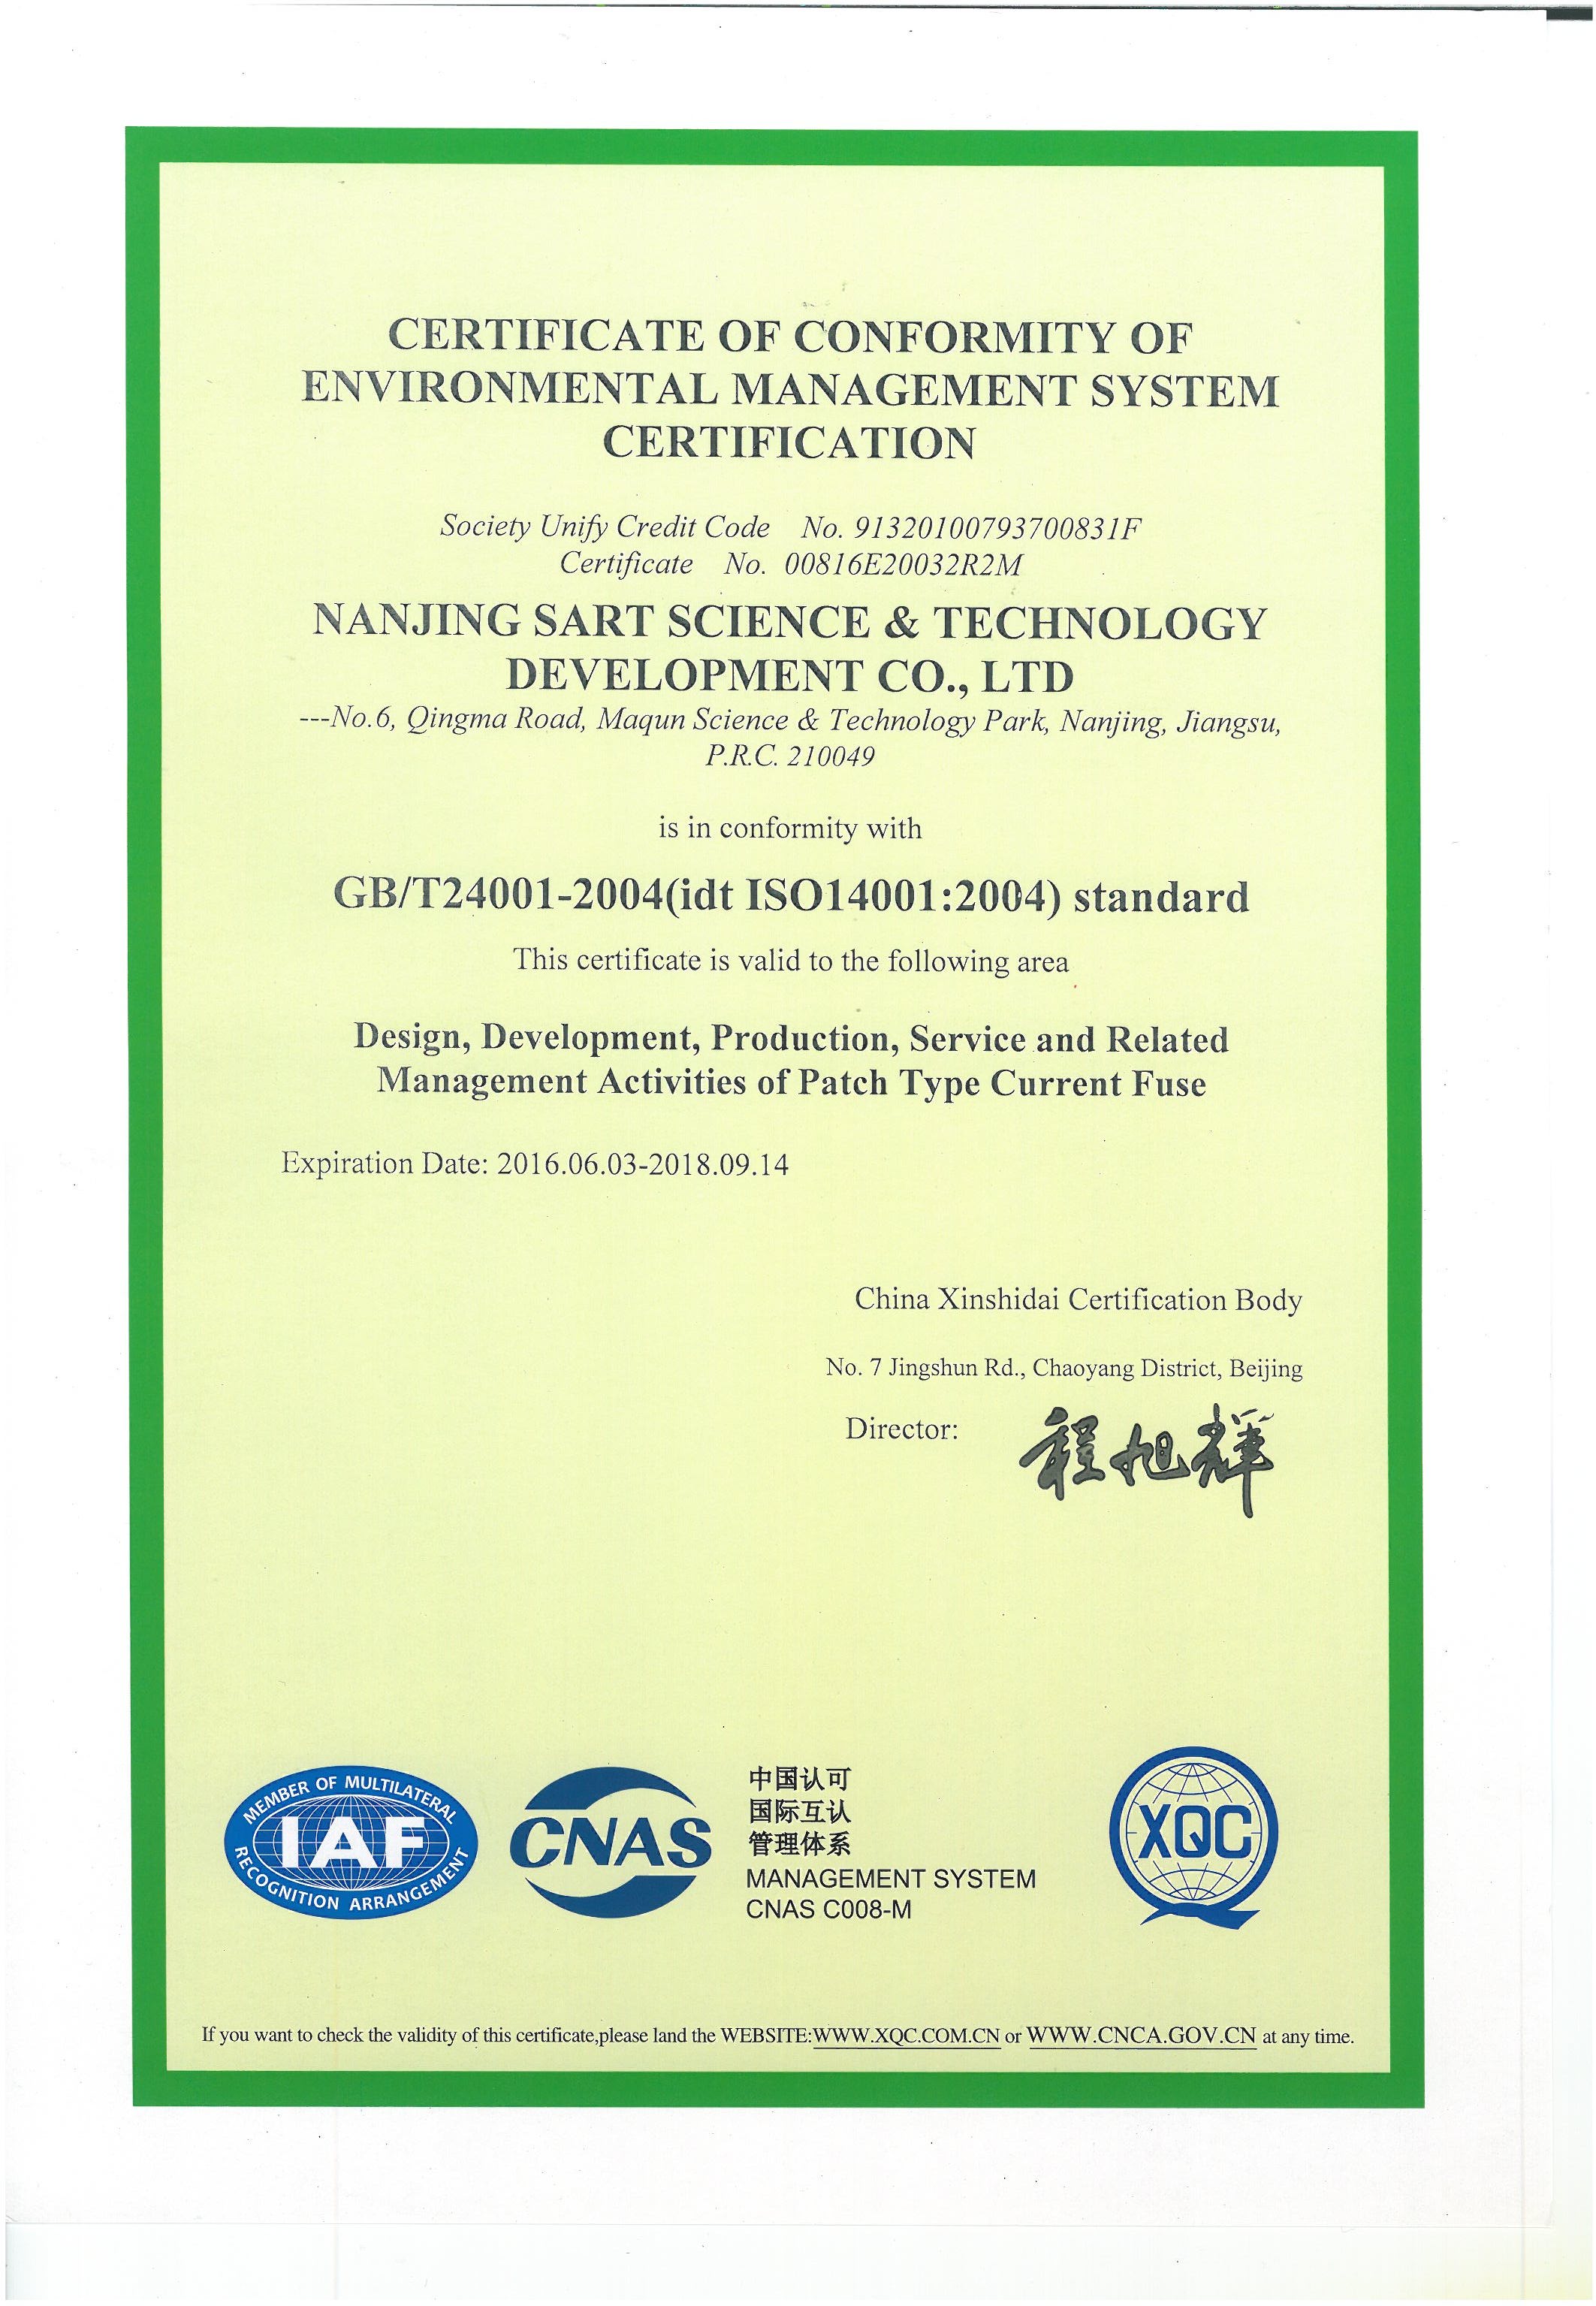 ISO14001 certificate EN